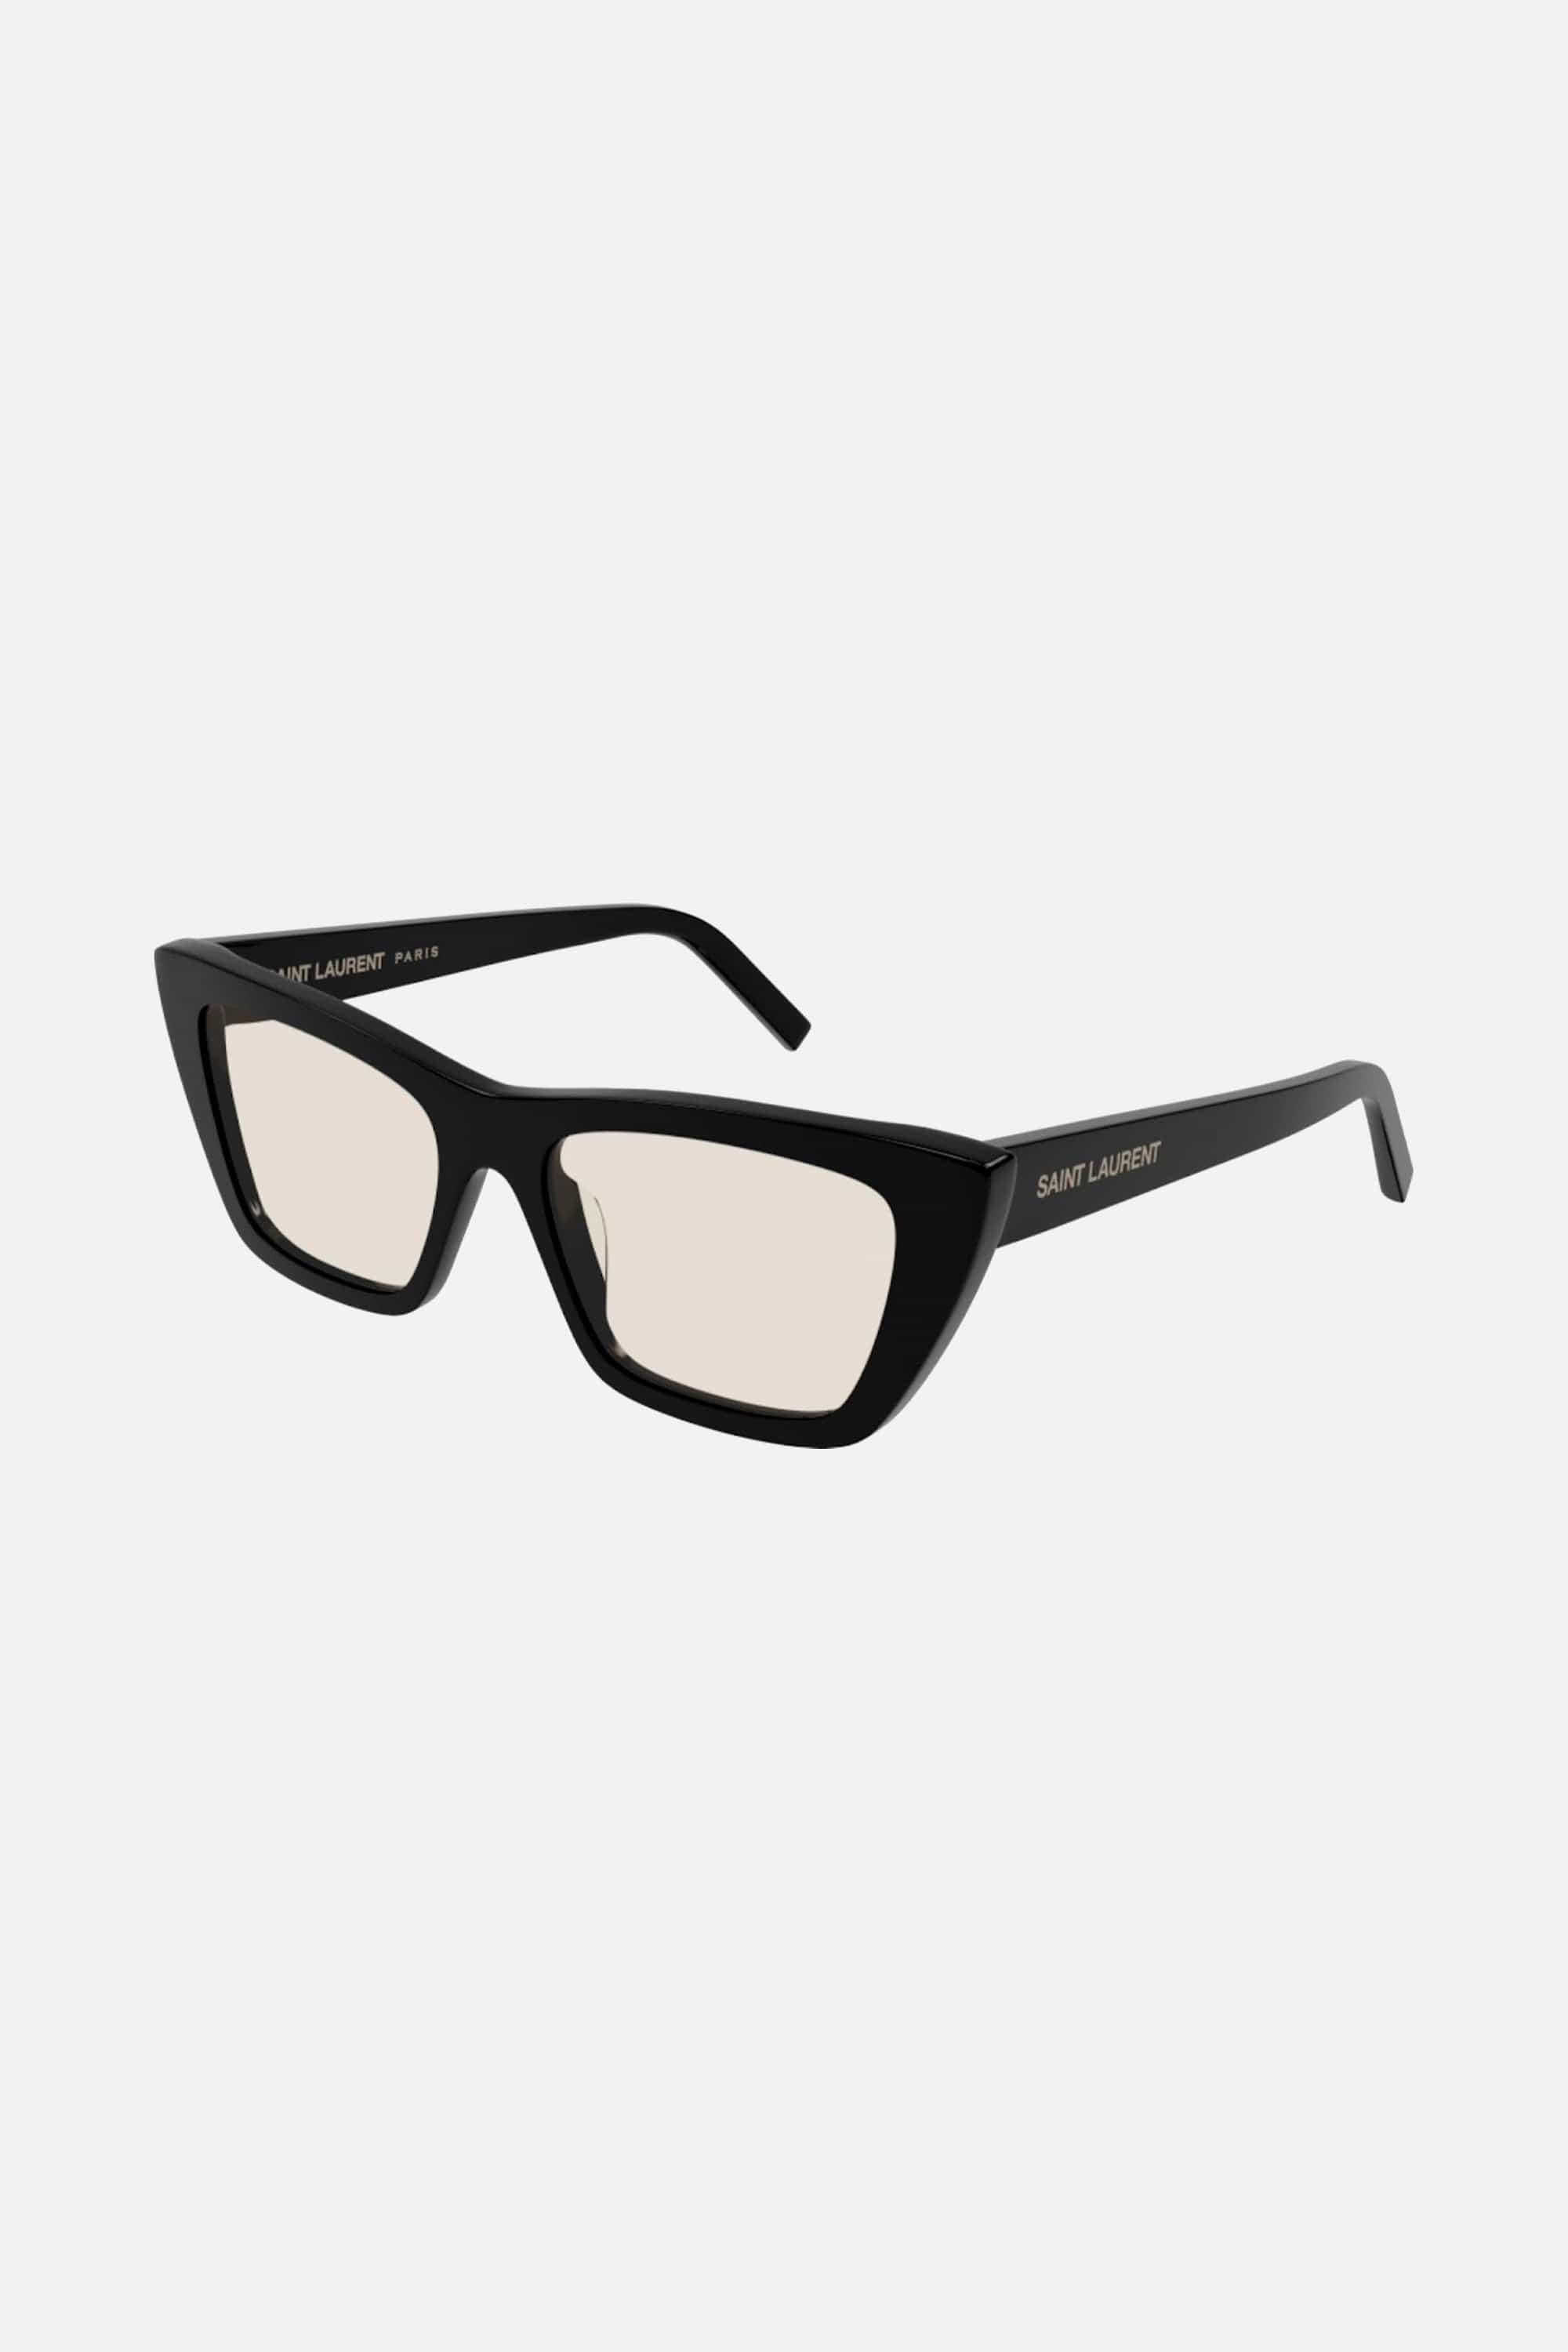 Saint Laurent iconic MICA cat-eye sunglasses with nude lenses - Eyewear Club